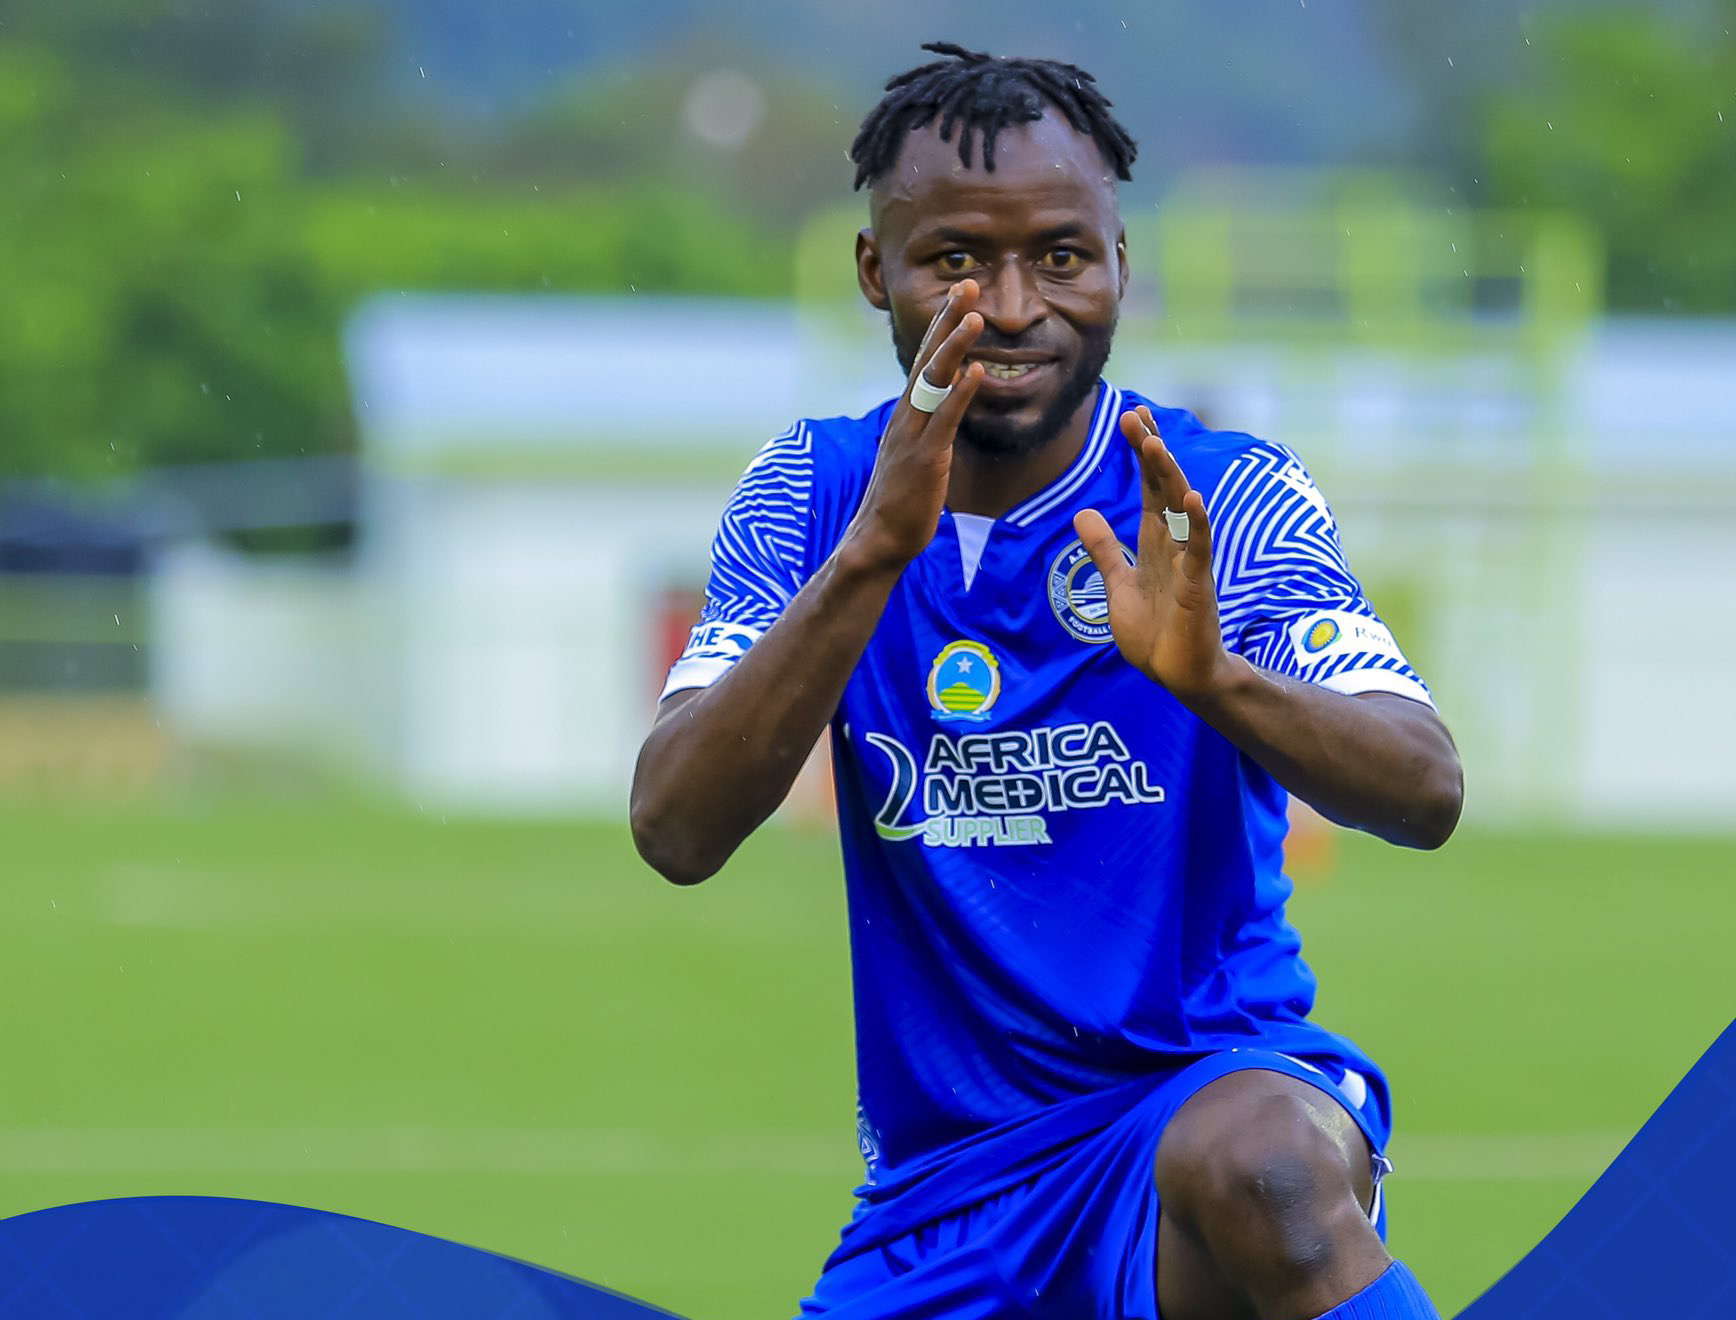 AS Kigali's striker Shaban Hussein Shabalala celebrates the gaol during the match against . Courtesy